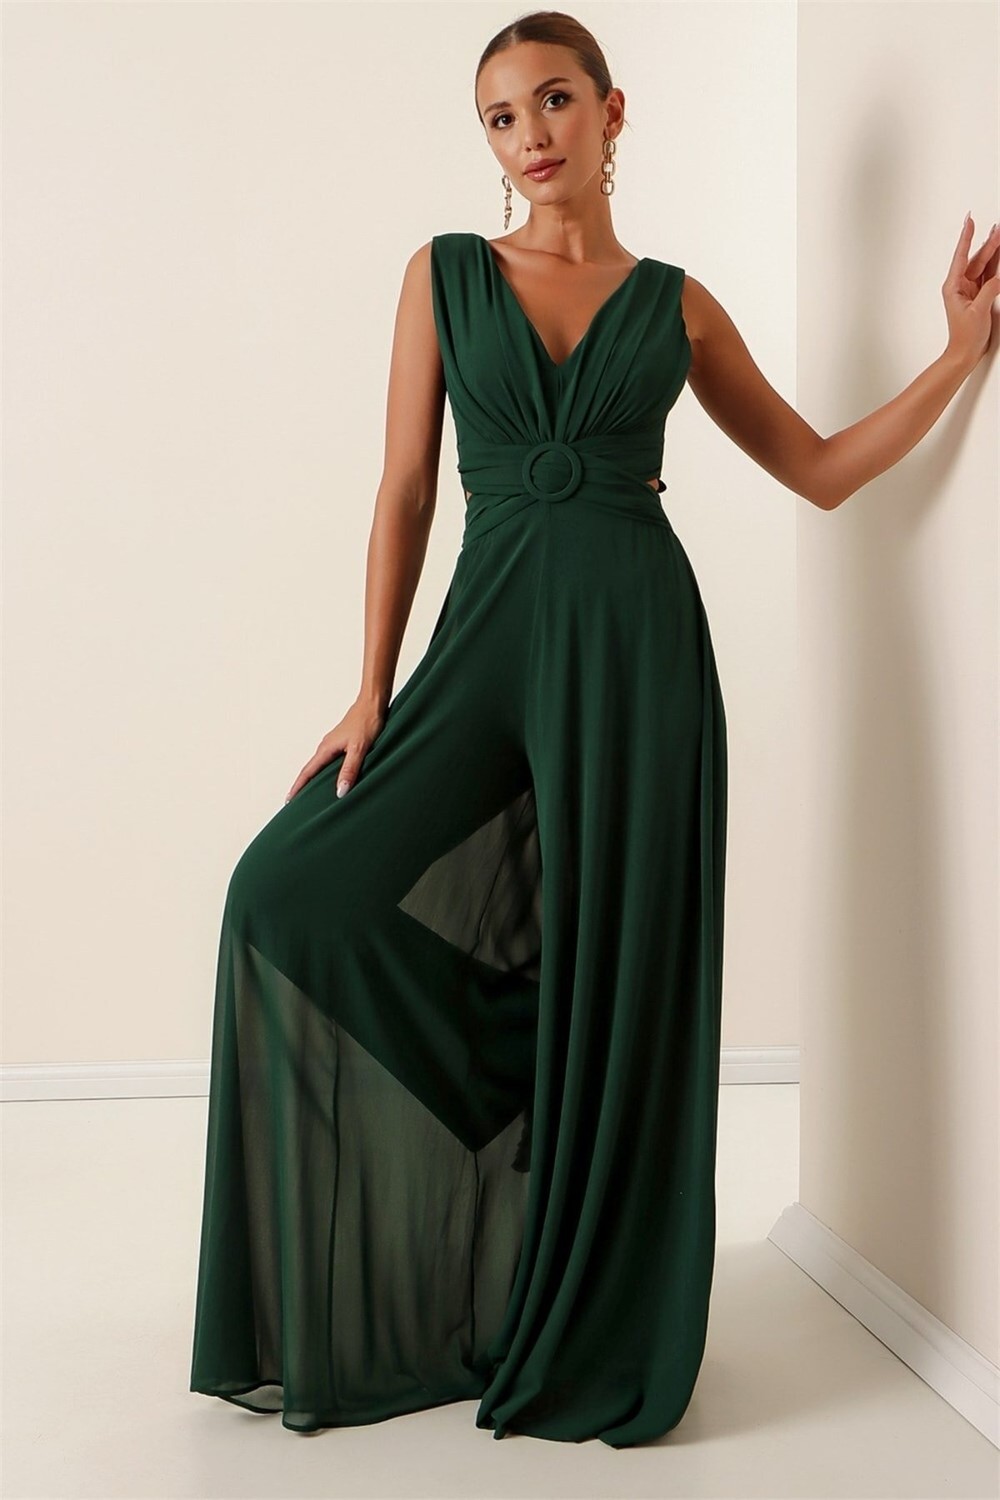 By Saygı Decollete Decollete Front Back V-Neck Lined Chiffon Jumpsuit Emerald